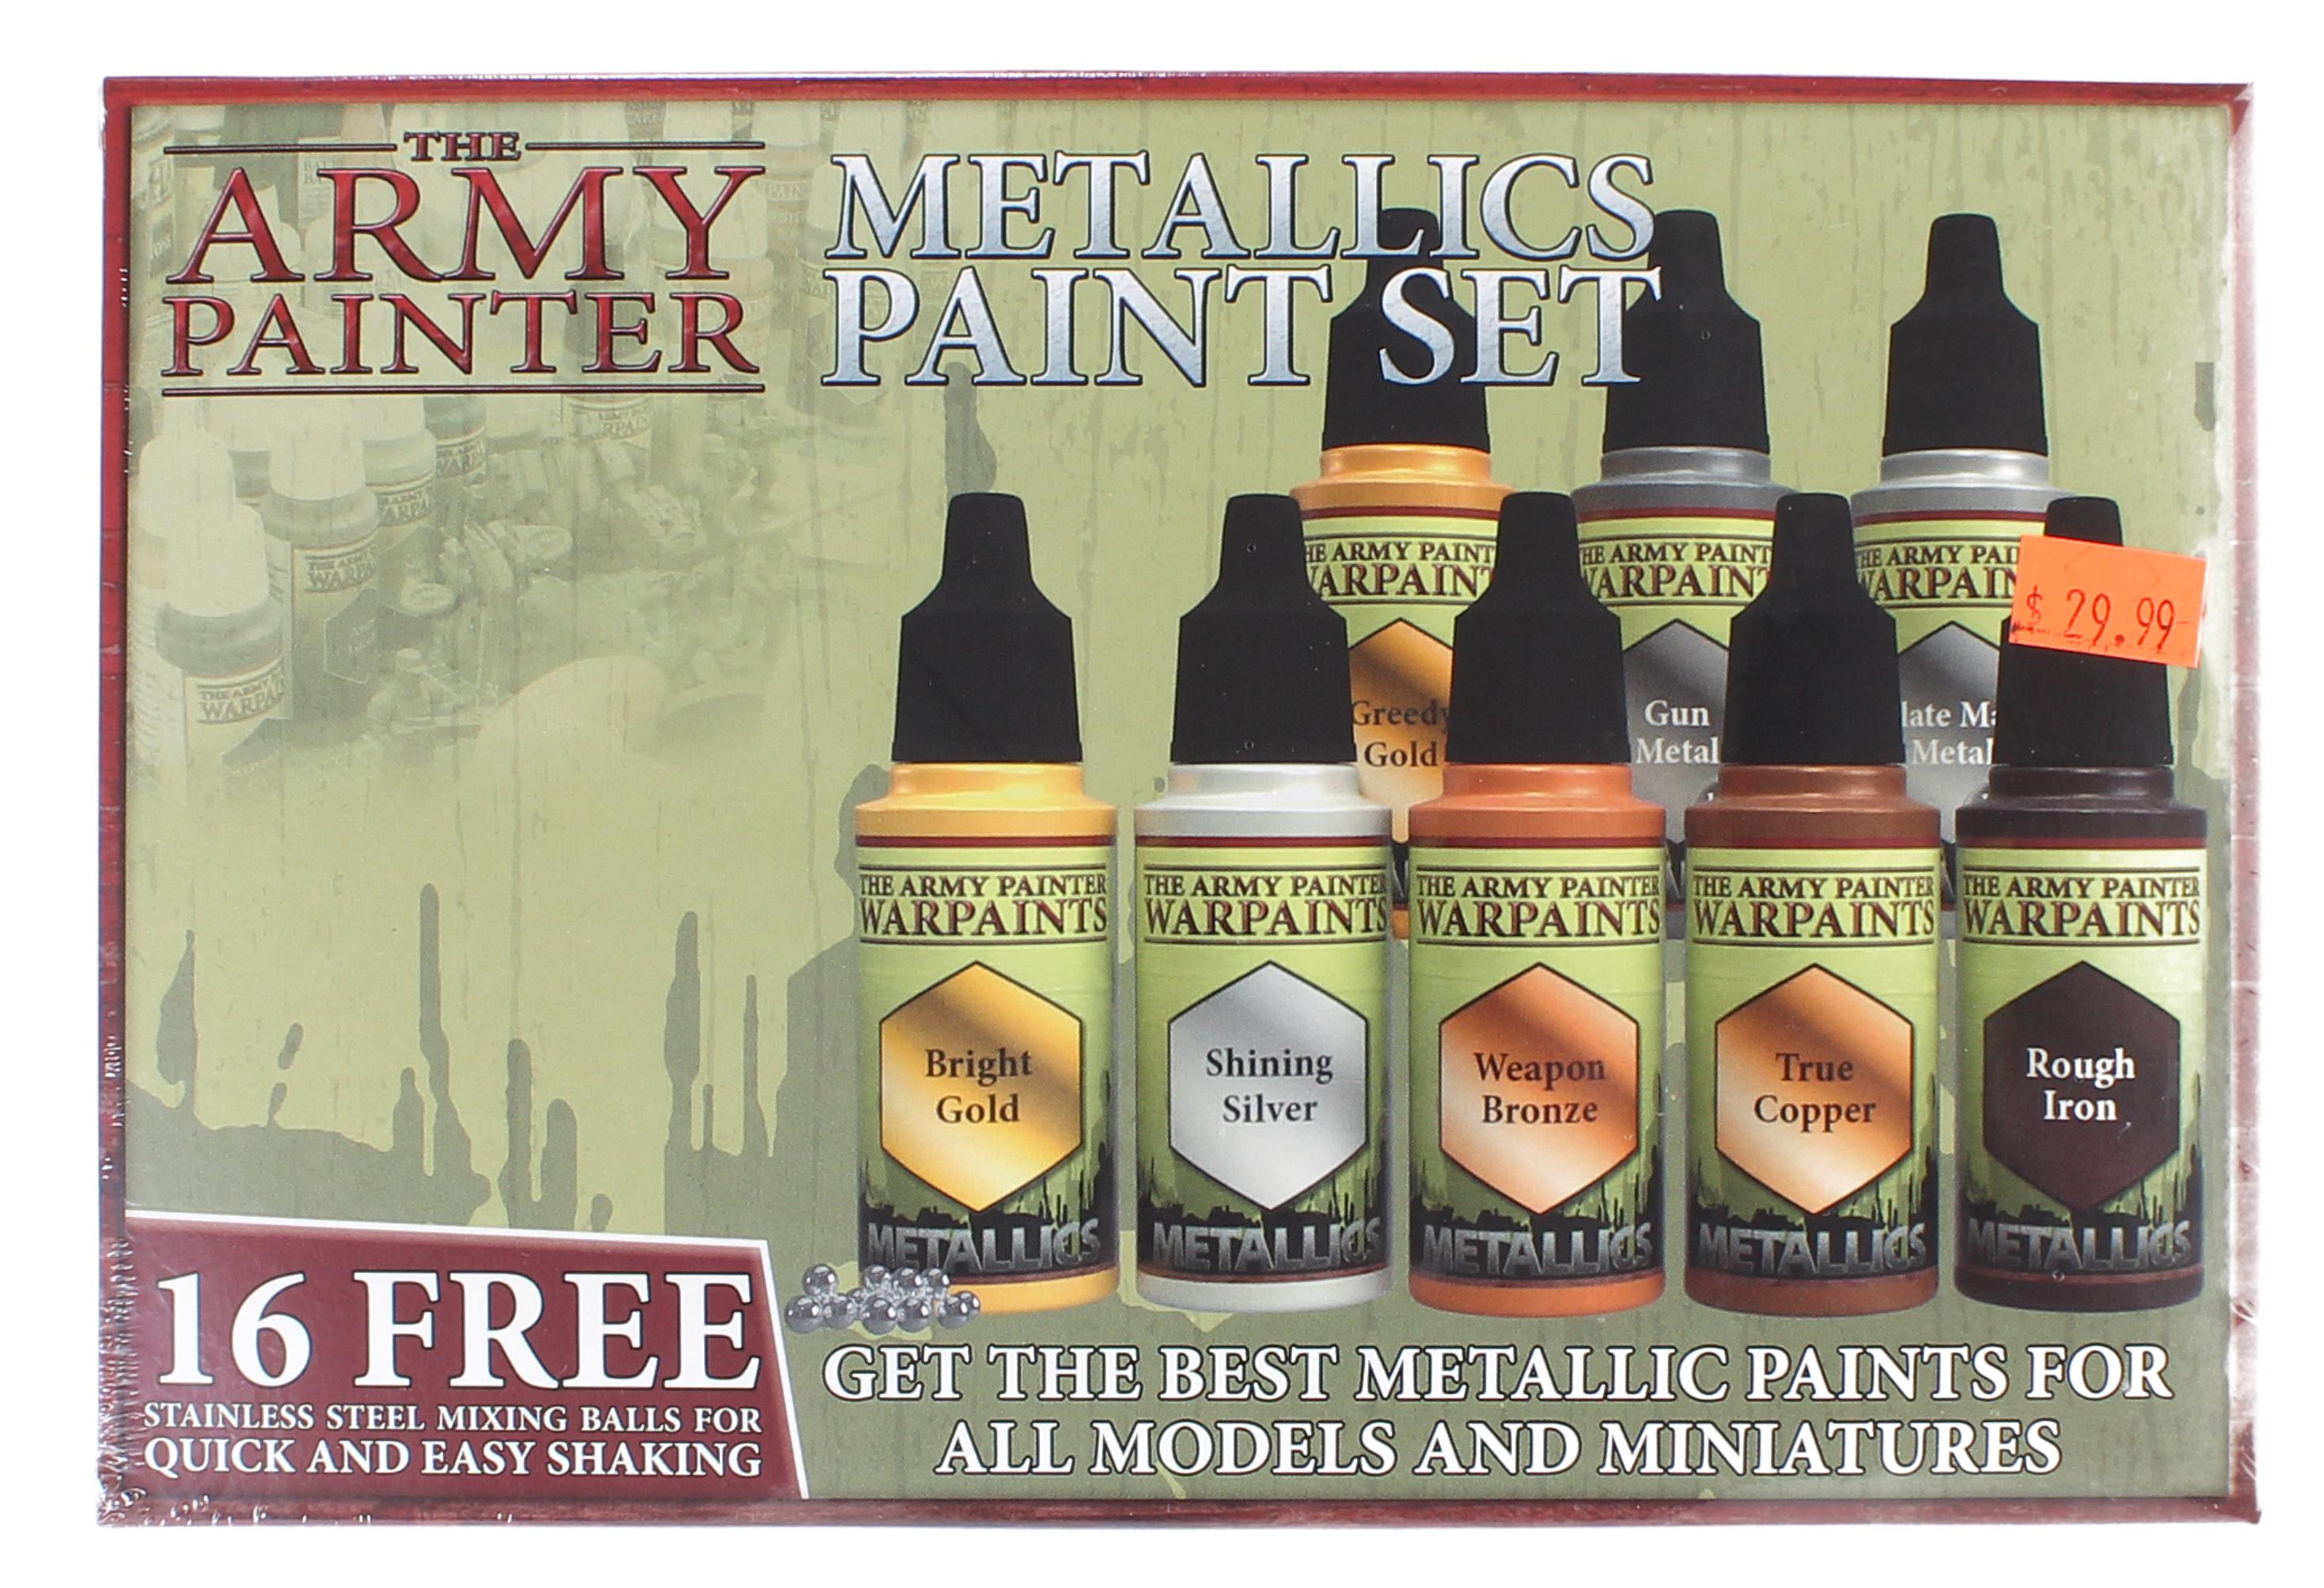 The Army Painter Metallics Paint Set